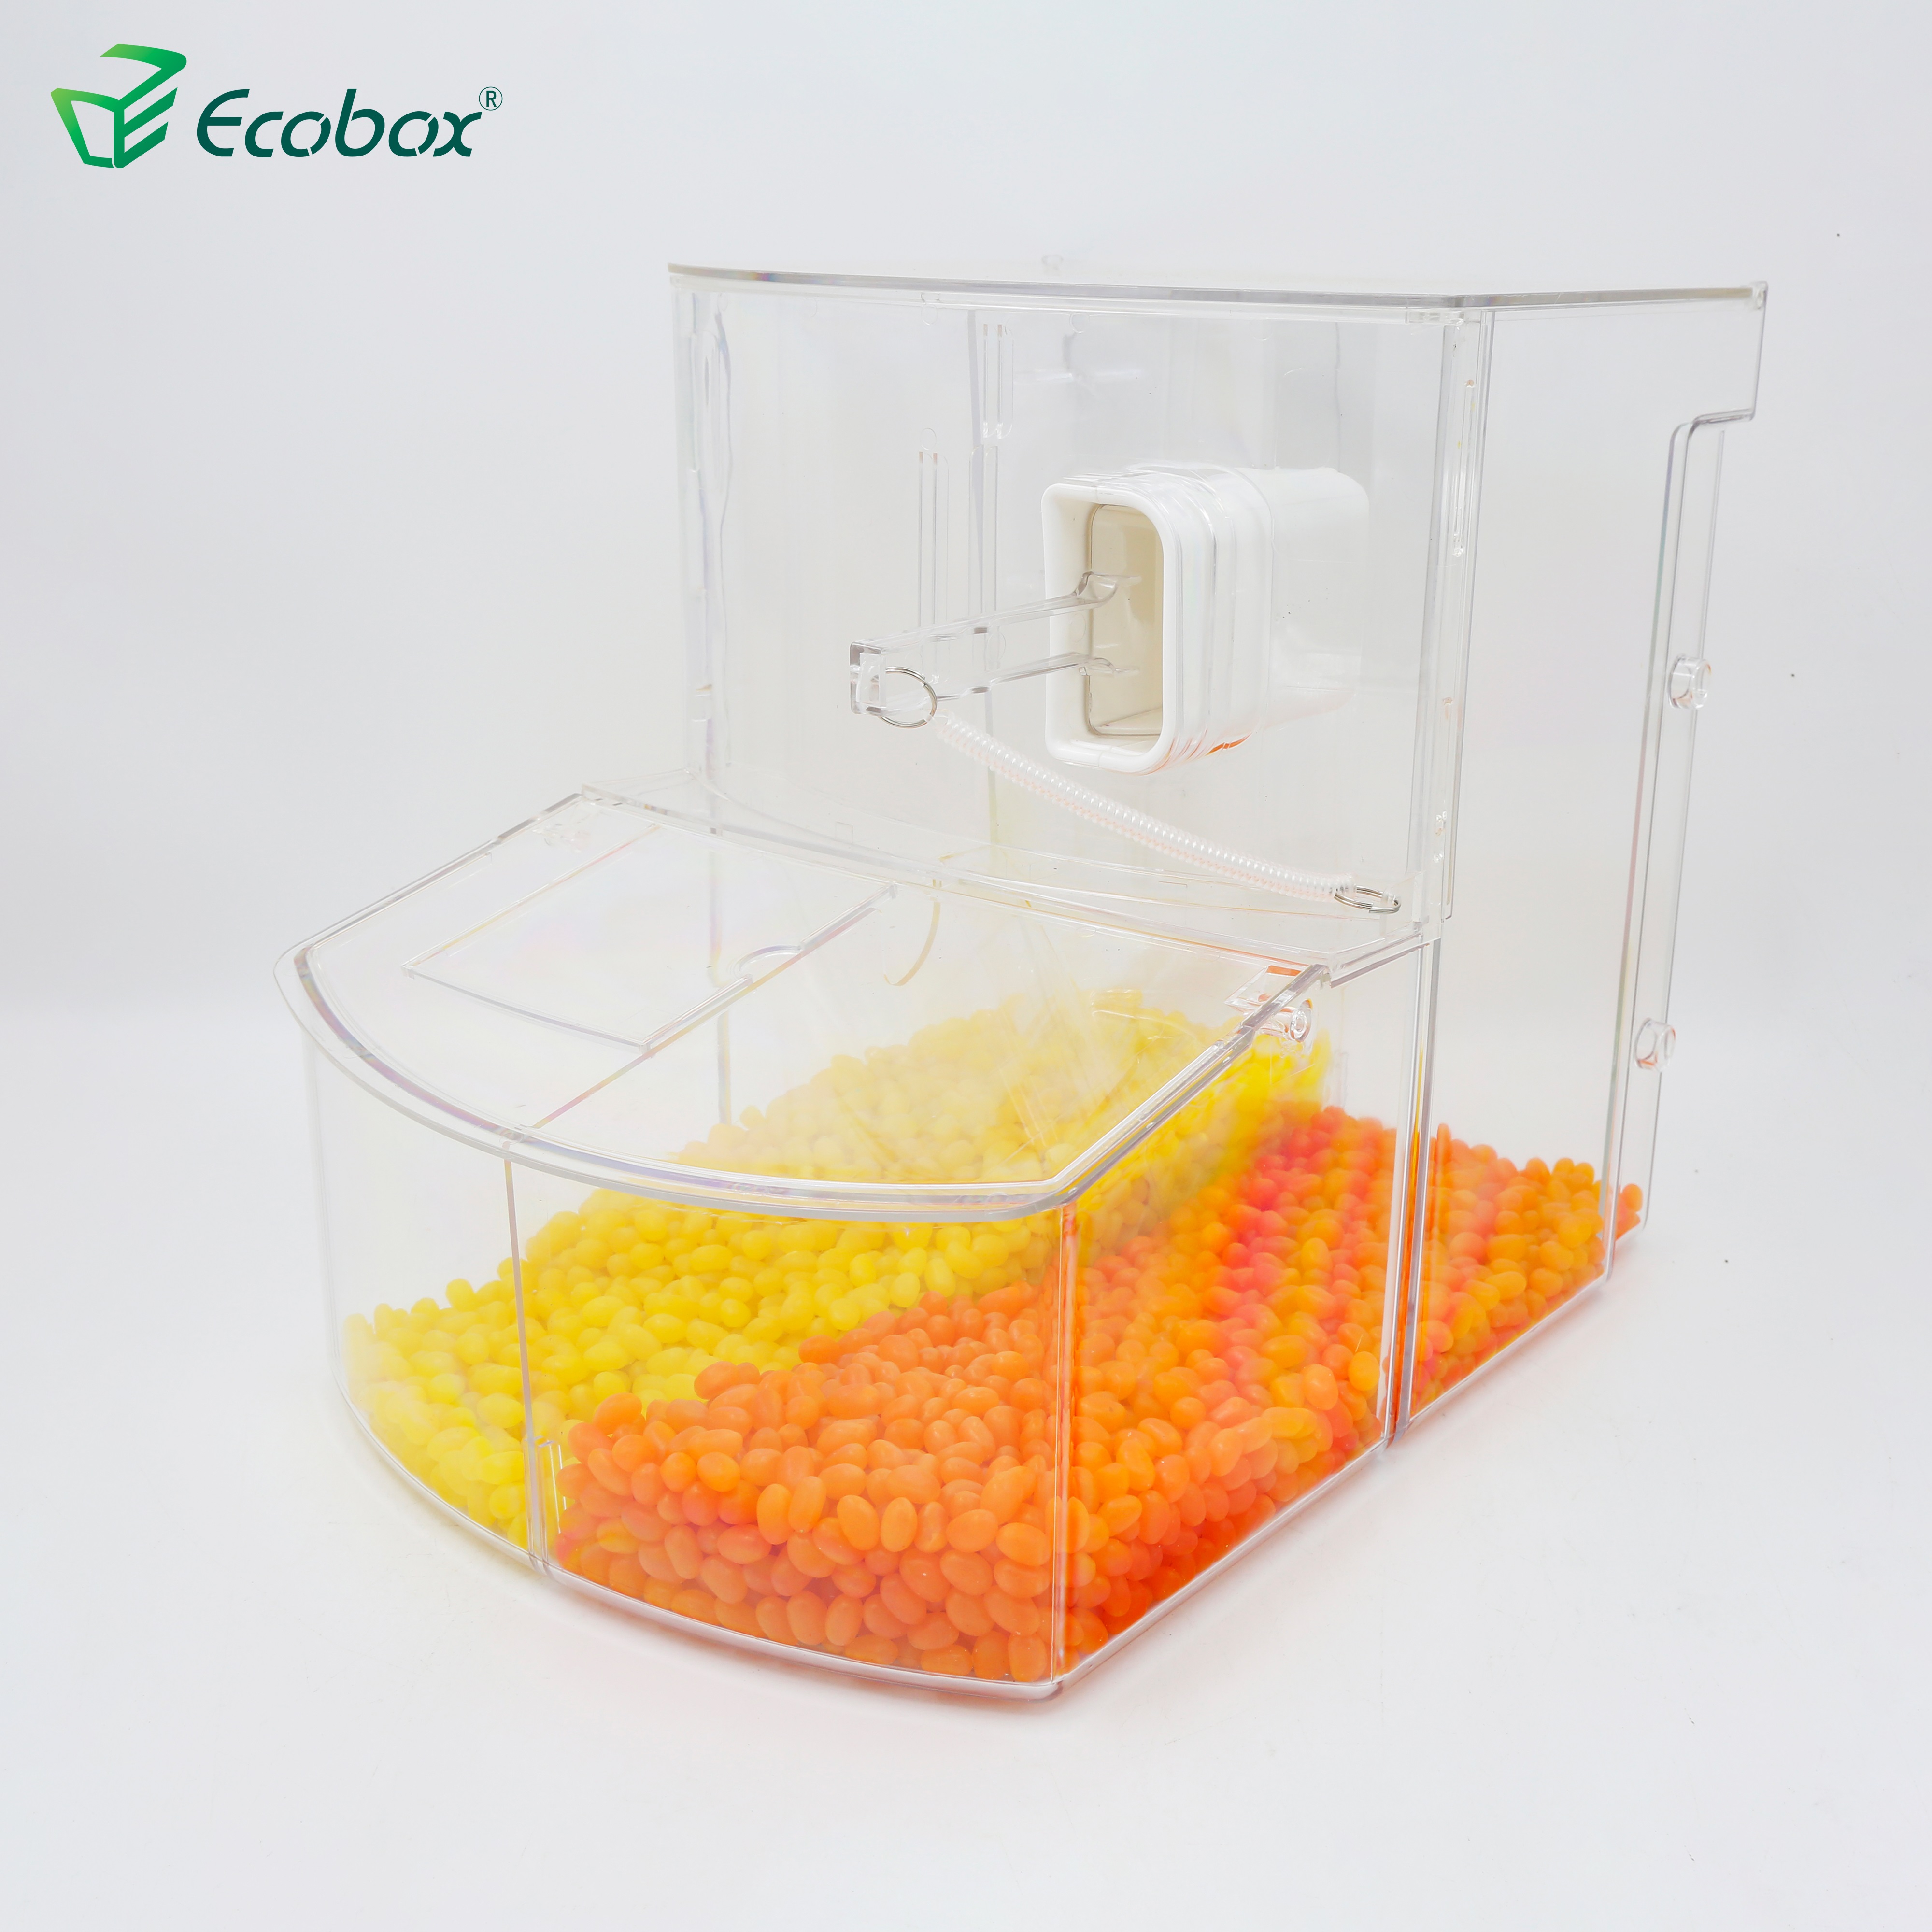 Ecobox SPH-001 Scoop bin